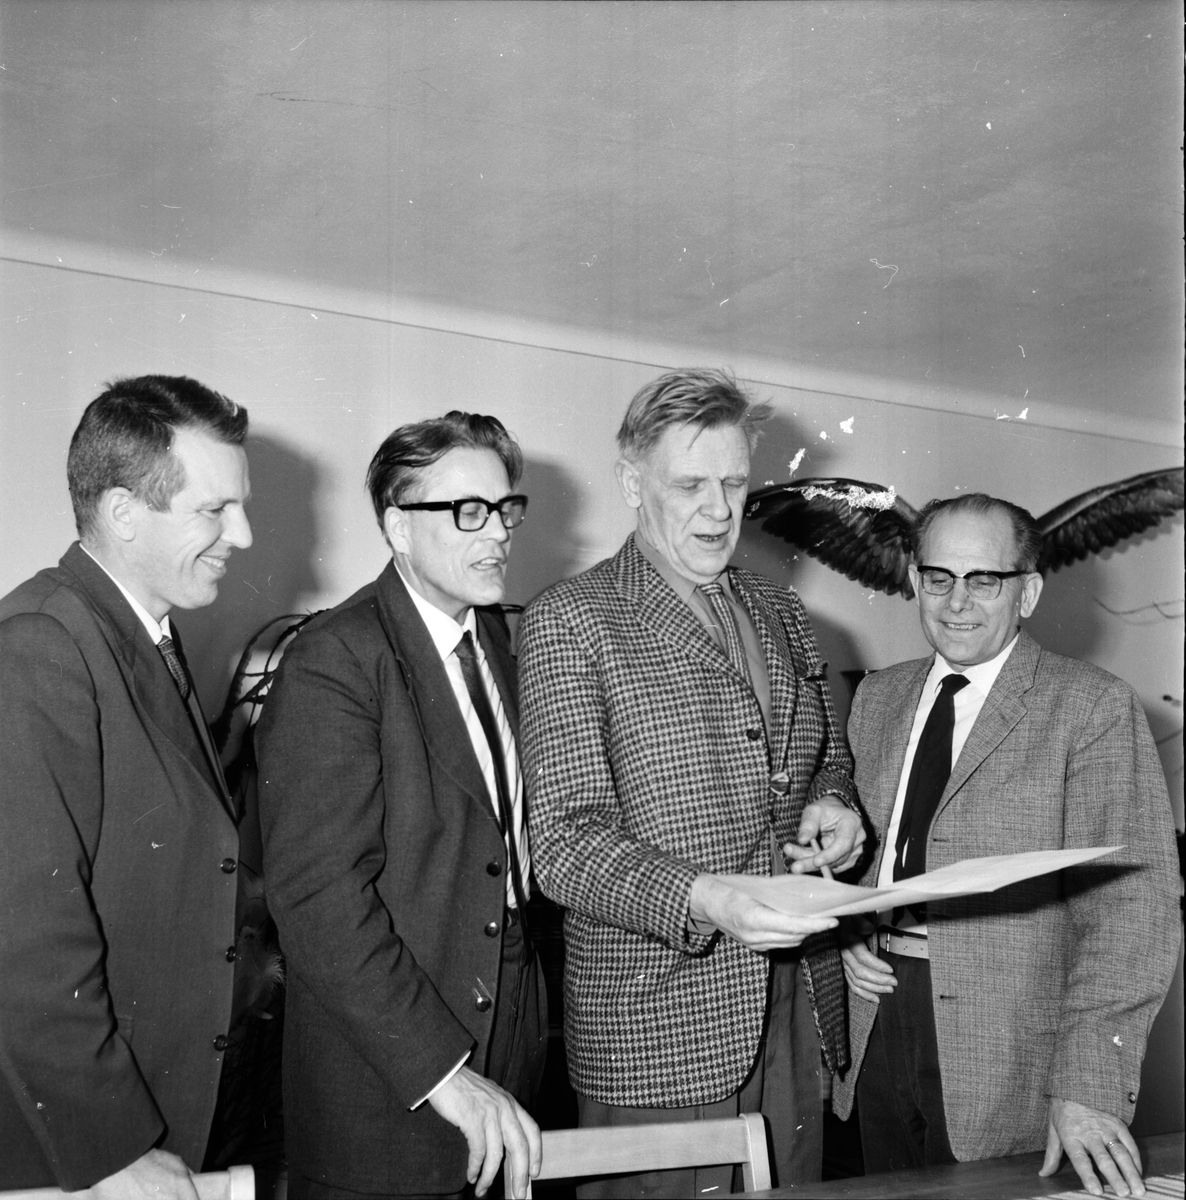 Tore Törnfeldt, Helge Sundström, Erik Örn och Johan Persson.
Nytorp, April 1966